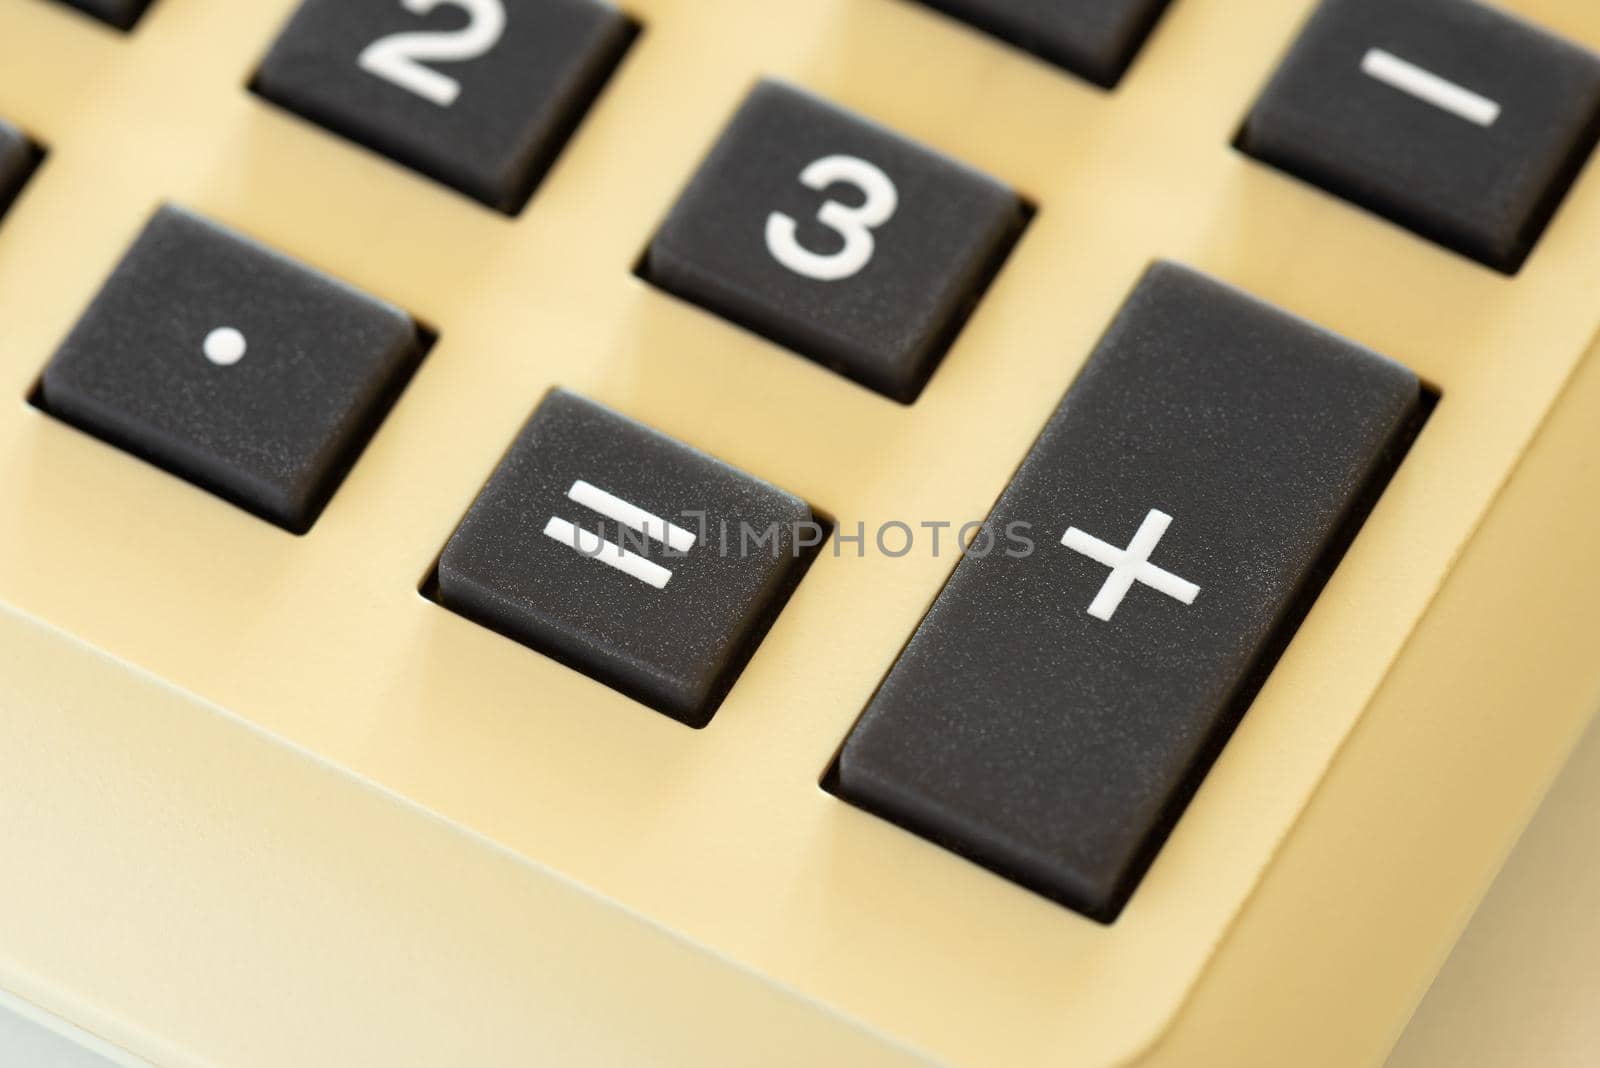 Home calculator on white by MaxalTamor